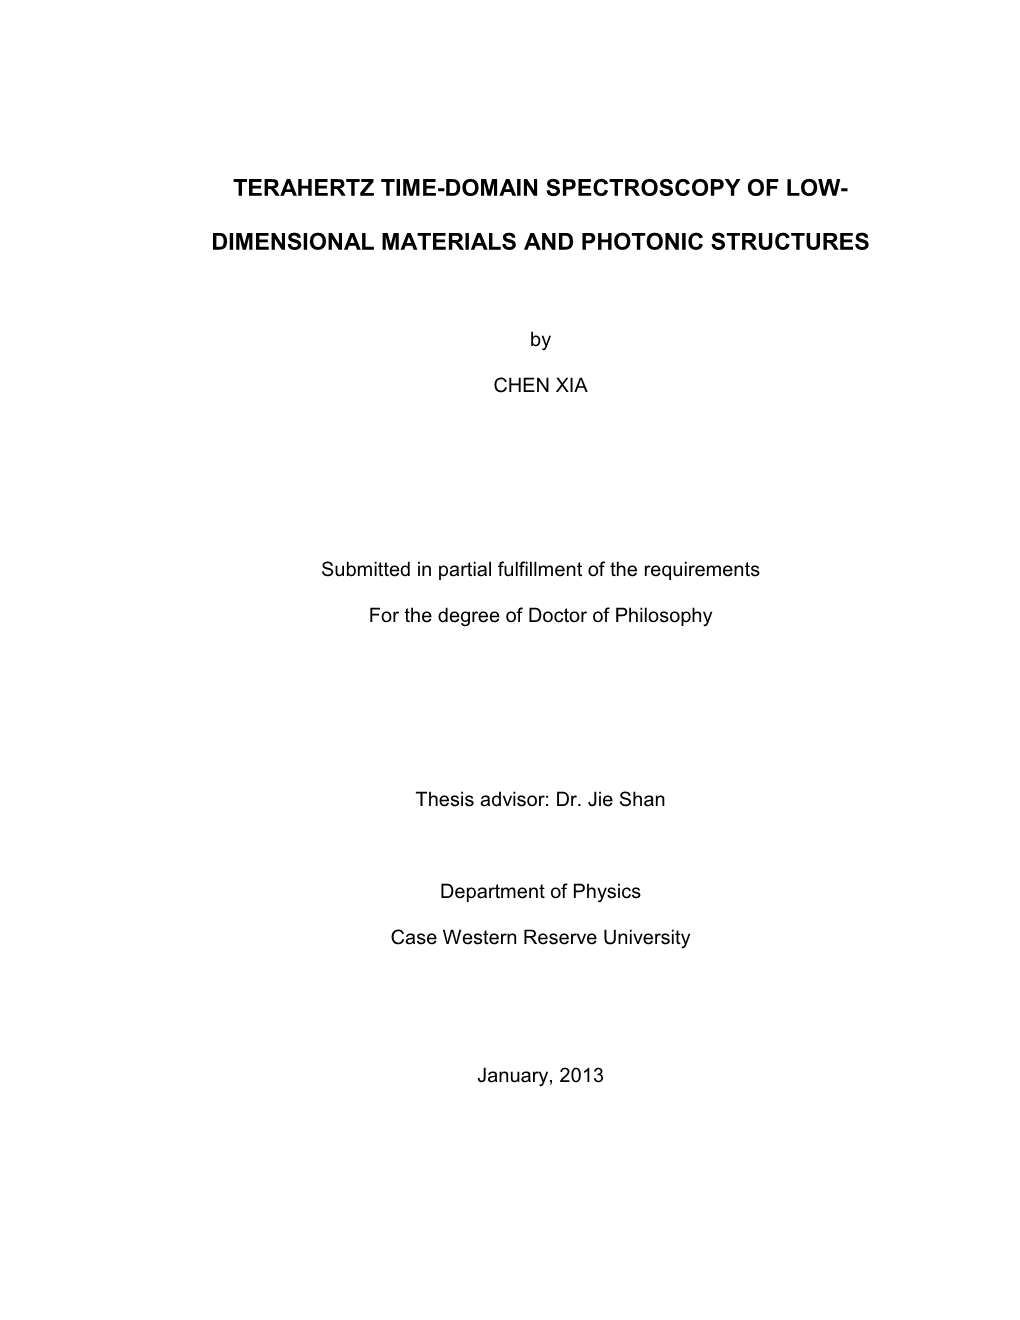 Terahertz Time-Domain Spectroscopy of Low